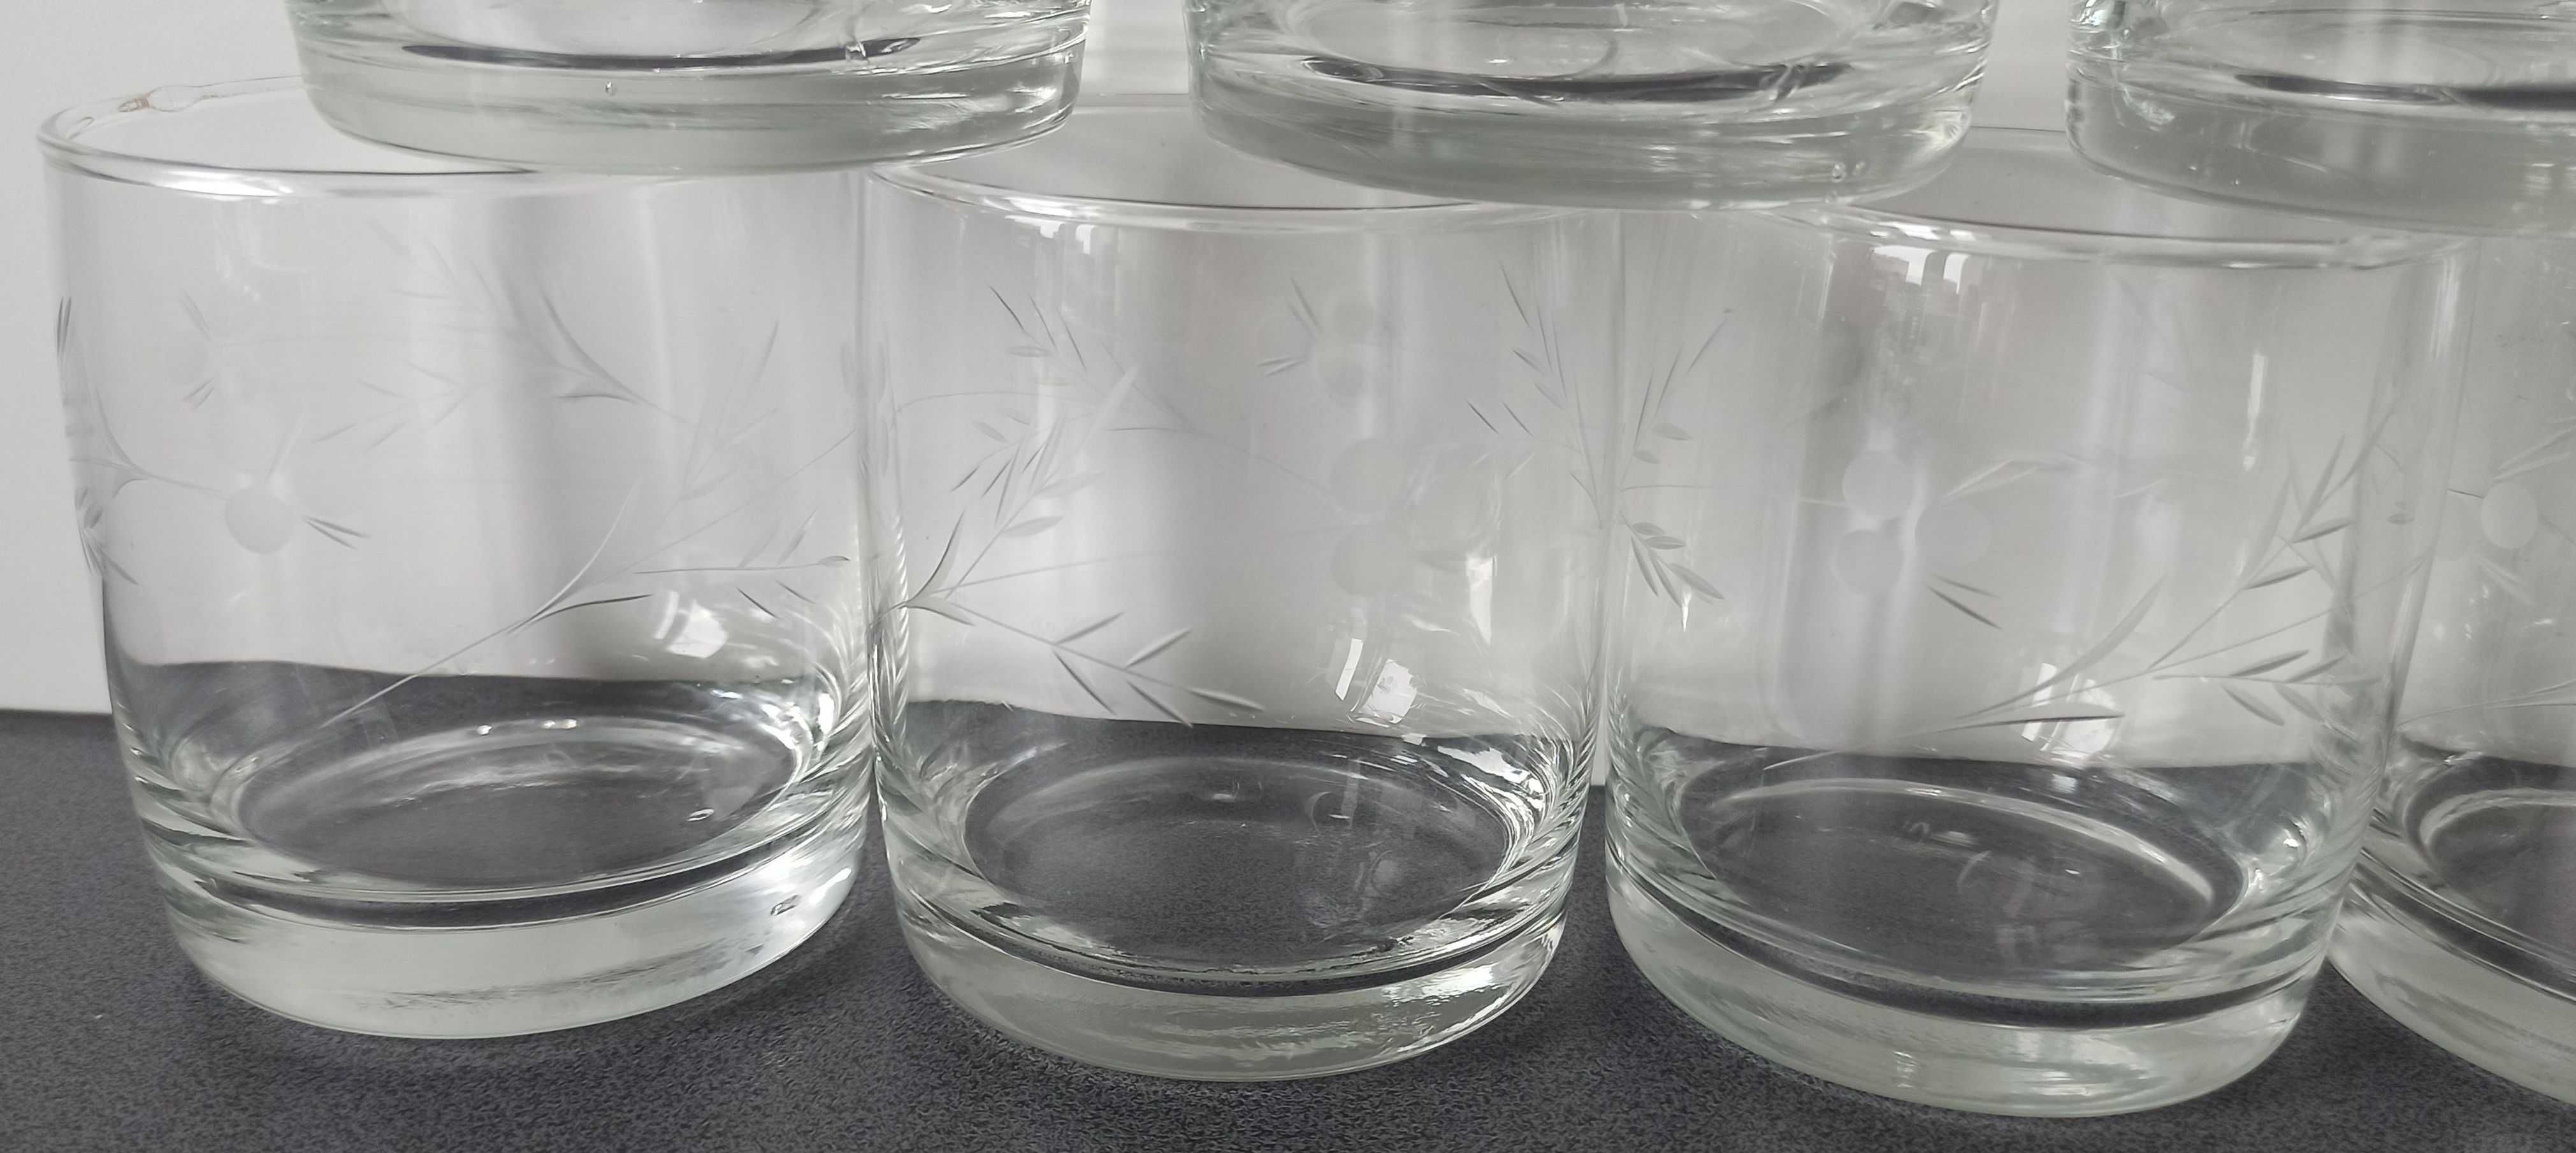 drinkówki zestaw szklanek do drinków 8 sztuk 8,5 cm